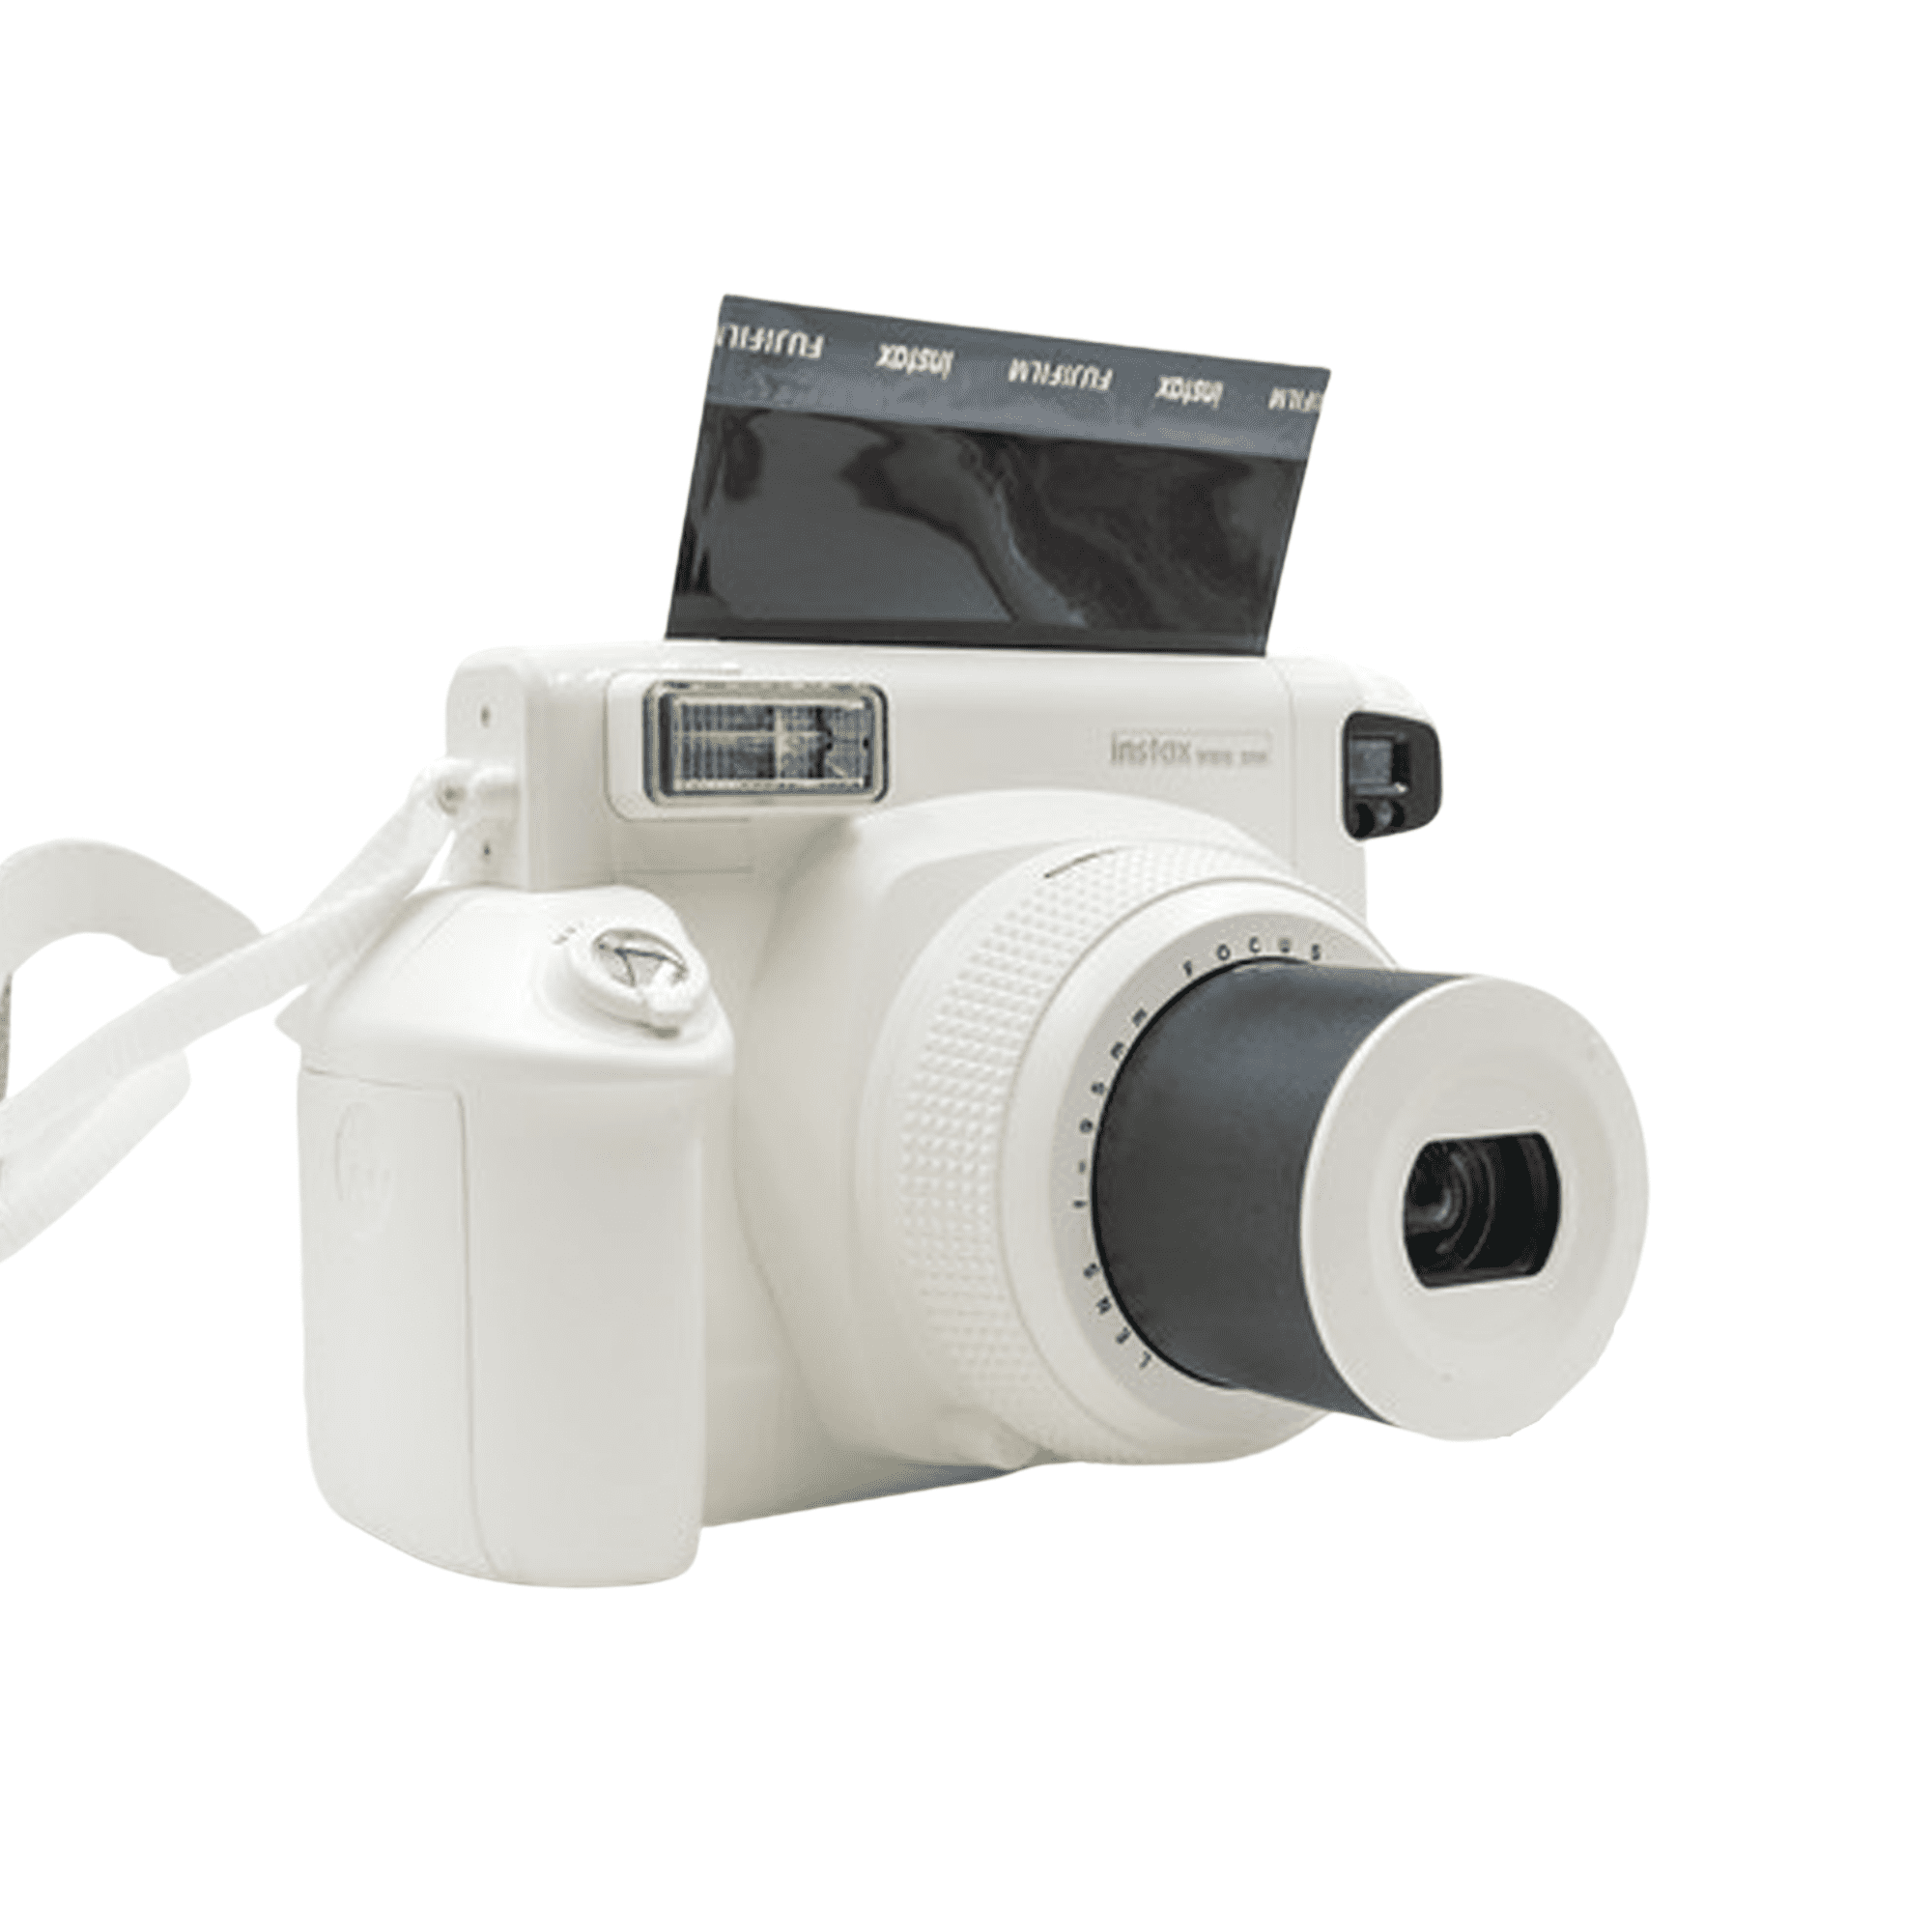 FUJIFILM Instax wide 300 Instant Camera Price in India - Buy FUJIFILM  Instax wide 300 Instant Camera online at